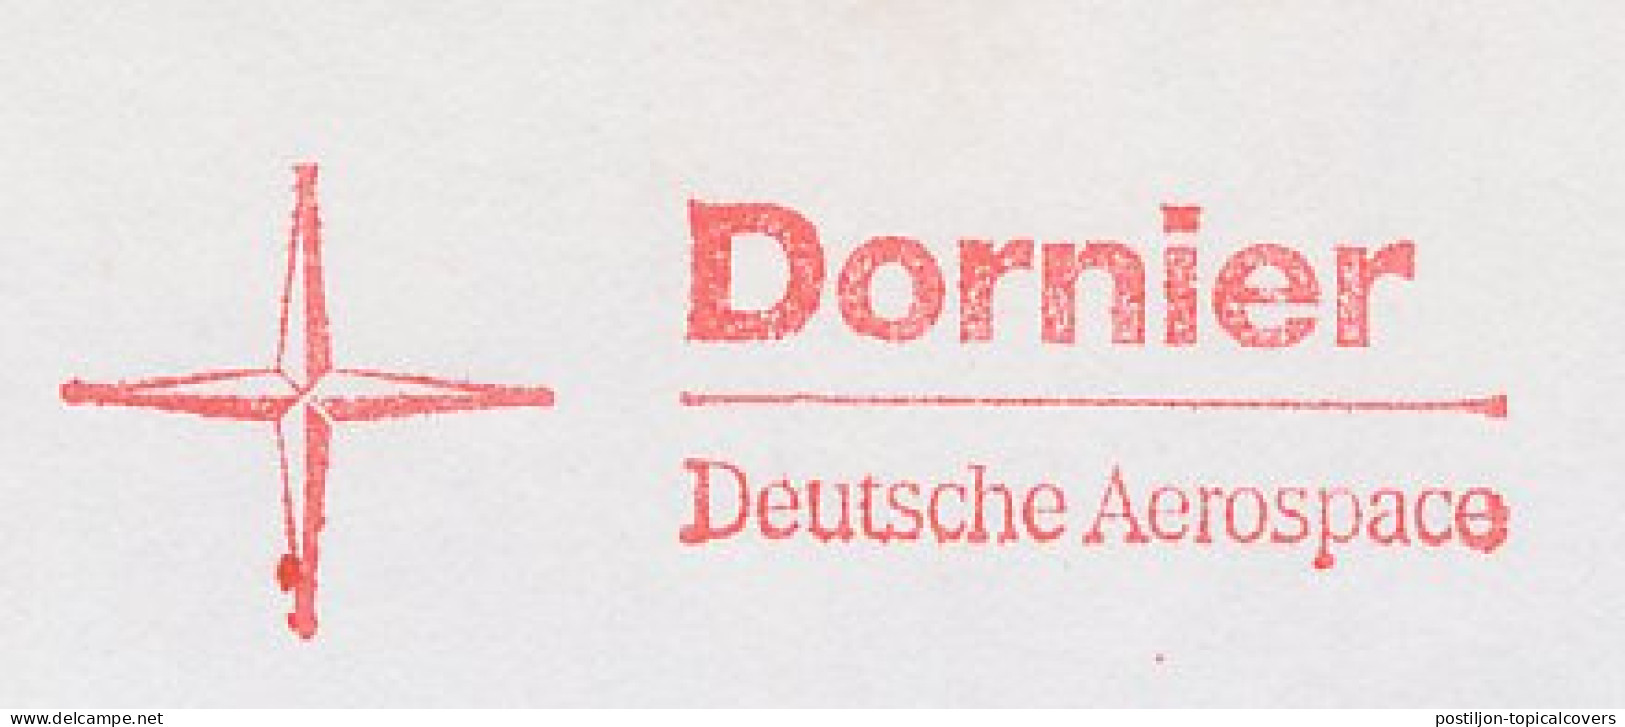 Meter Cut Germany 1989 Dornier - Aerospace - Astronomy